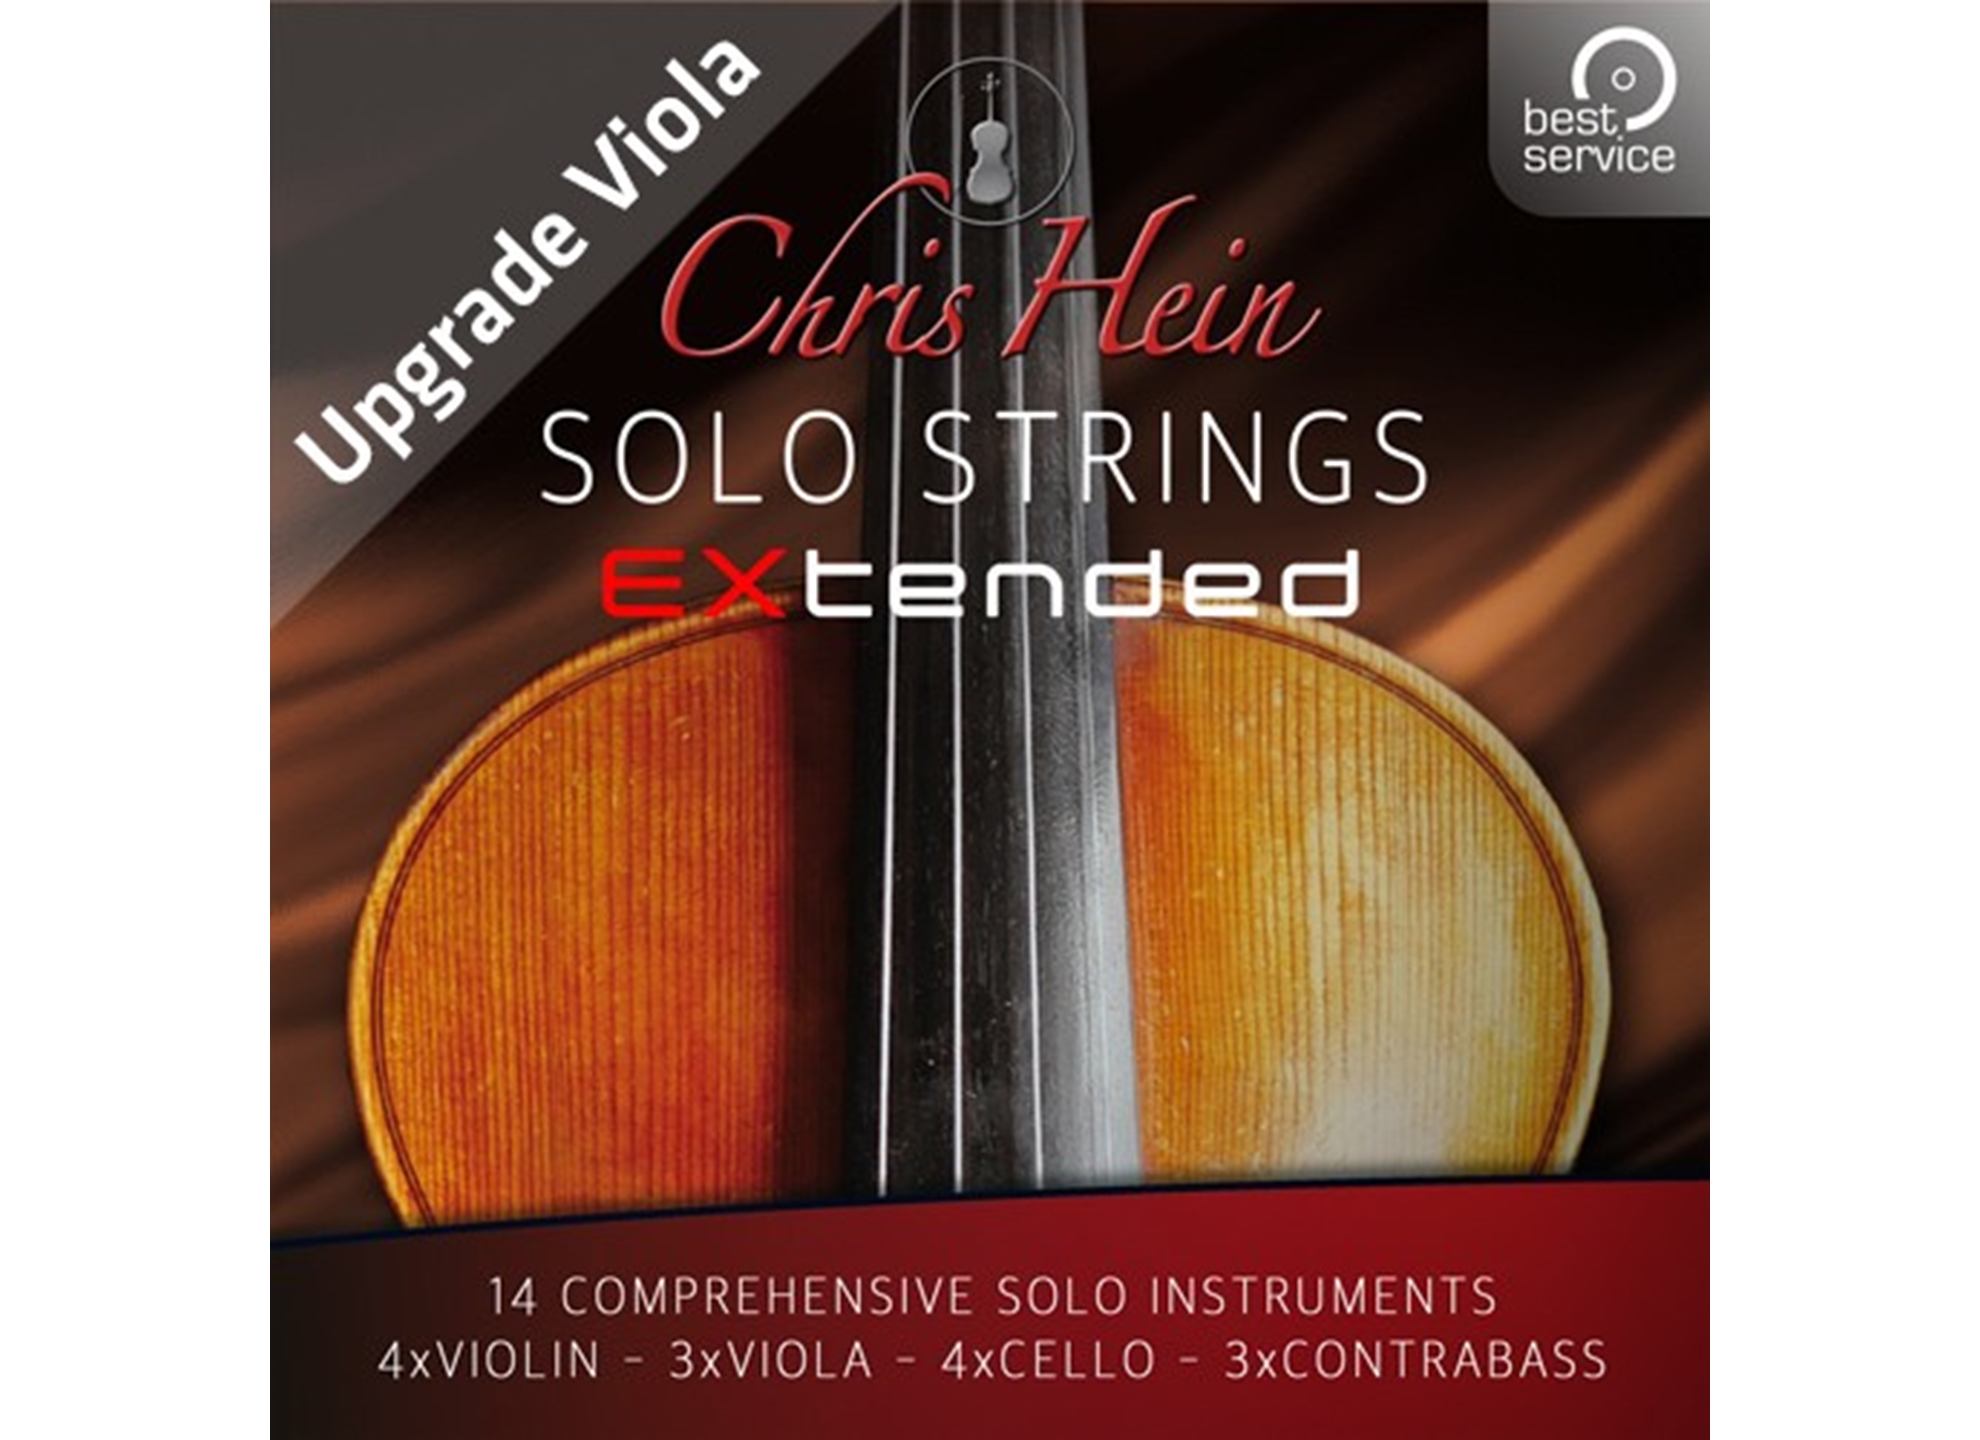 Chris Hein Solo Strings Complete Upgrade Viola